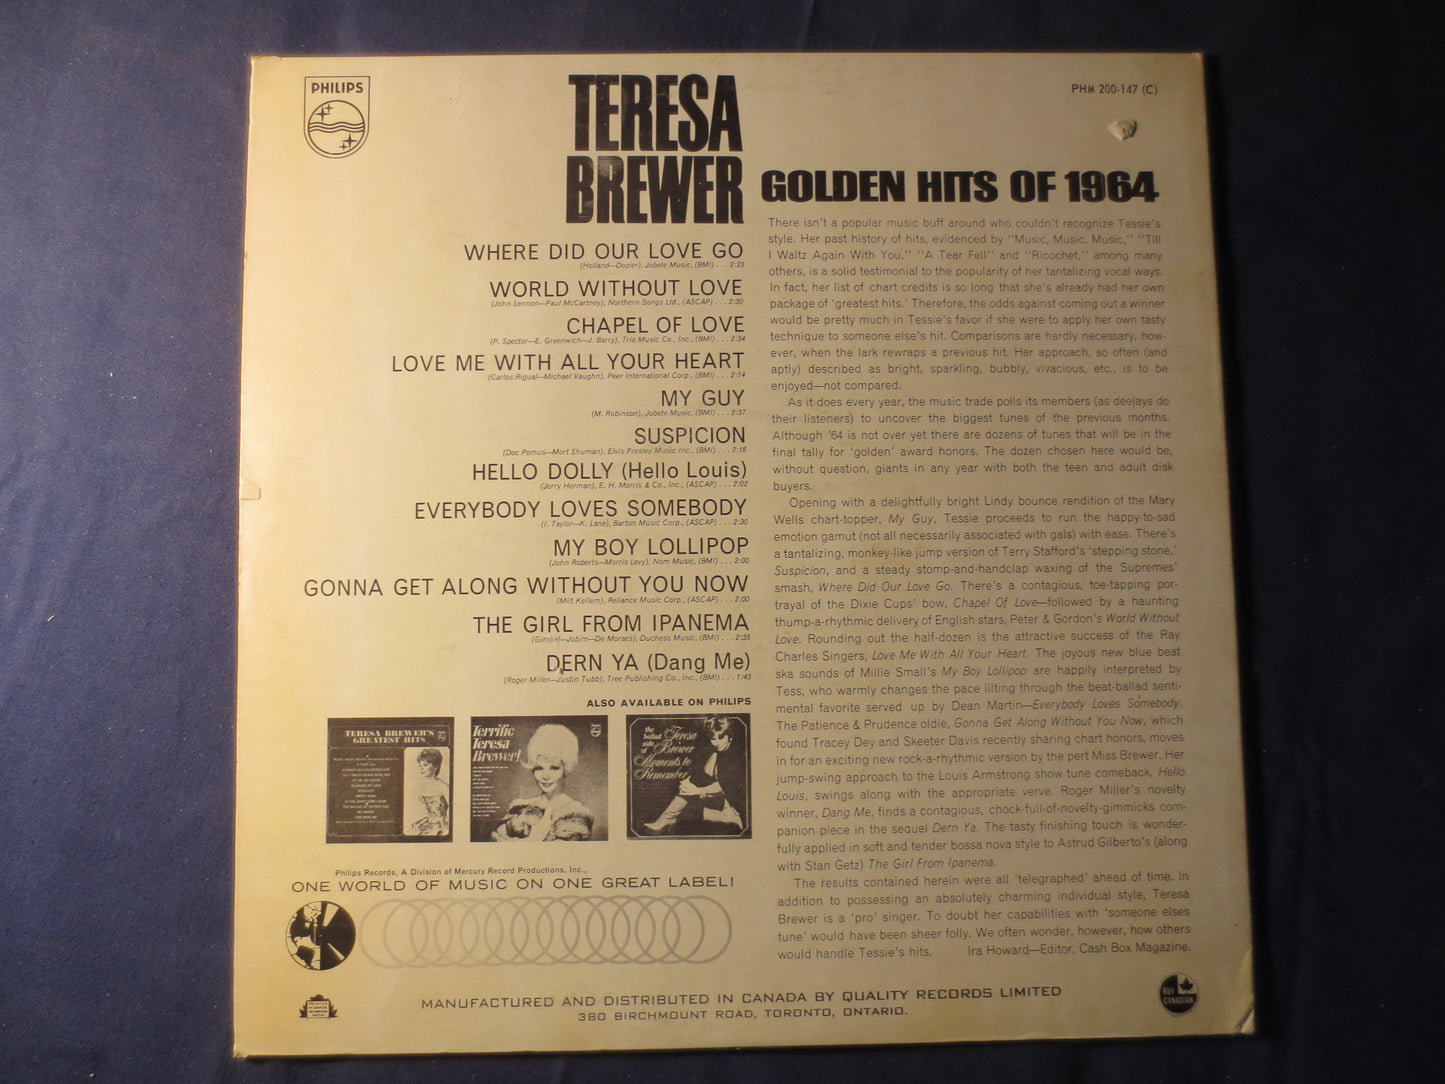 TERESA BREWER, GOLDEN Hits of 1964, Teresa Brewer Record, Teresa Brewer Album, Teresa Brewer Lps, Vinyl Lps, 1964 Records